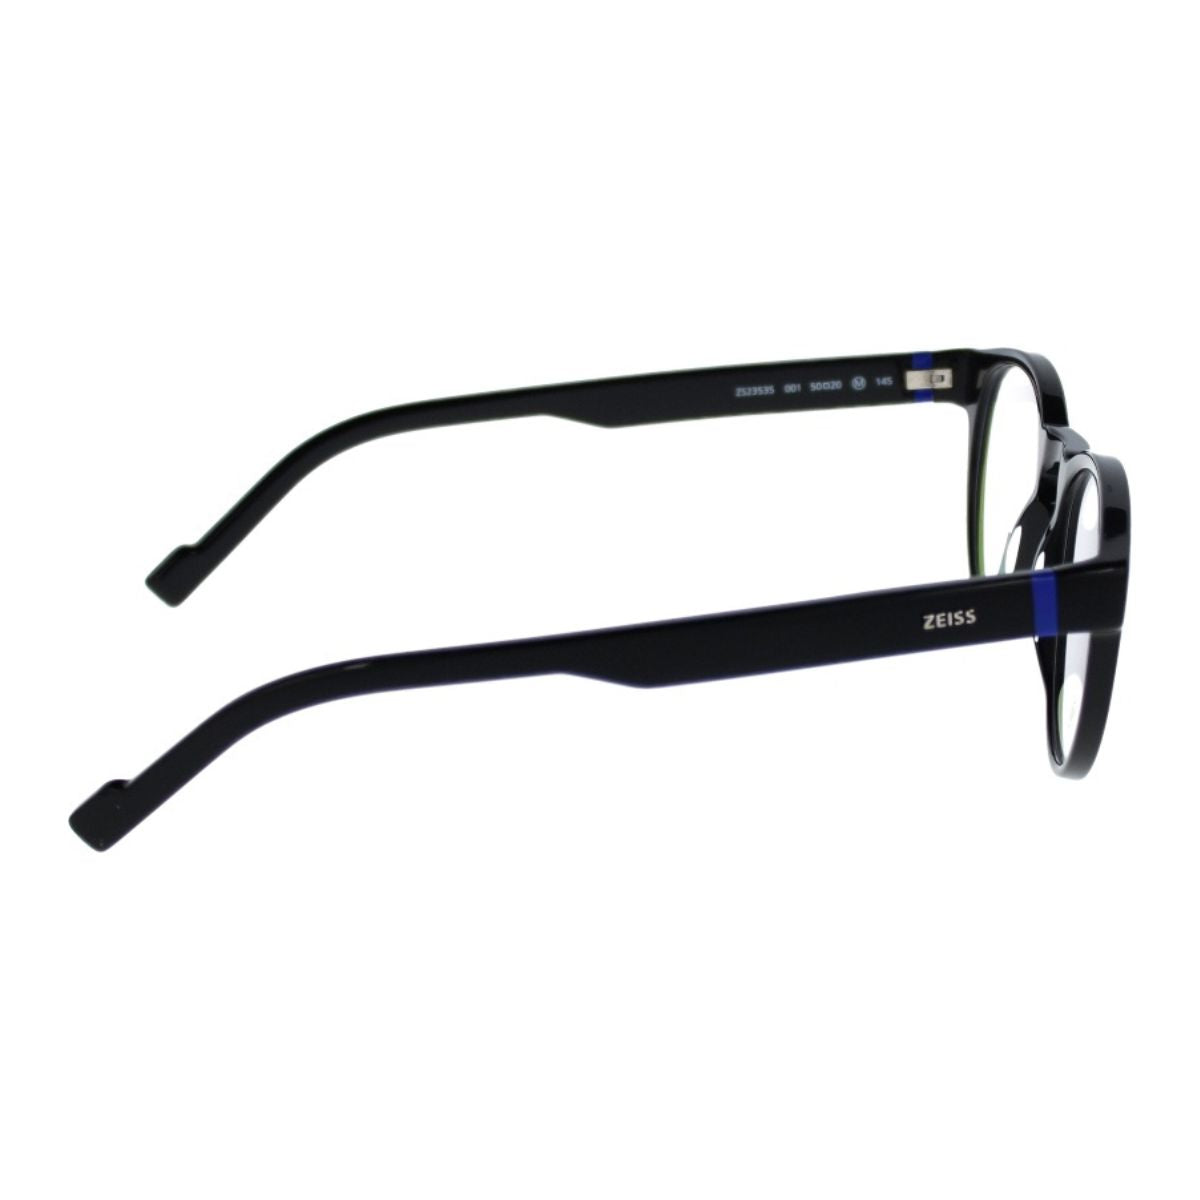  "Zeiss 23535 001 eyewear frame for men's and women's online at optorium"